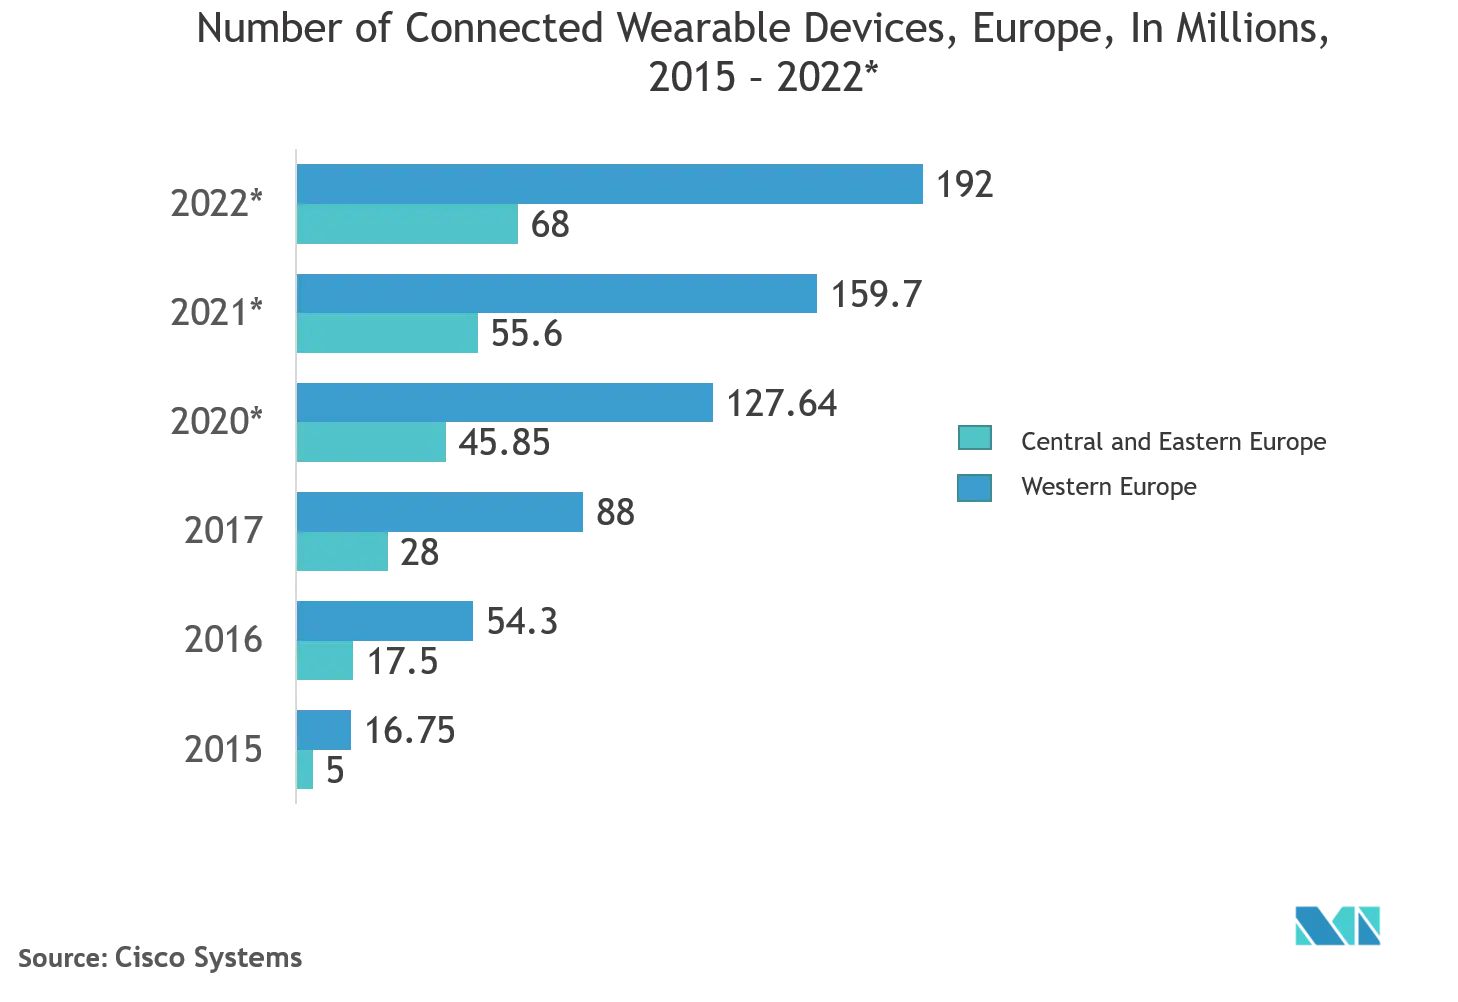 Europe wireless healthcare market share